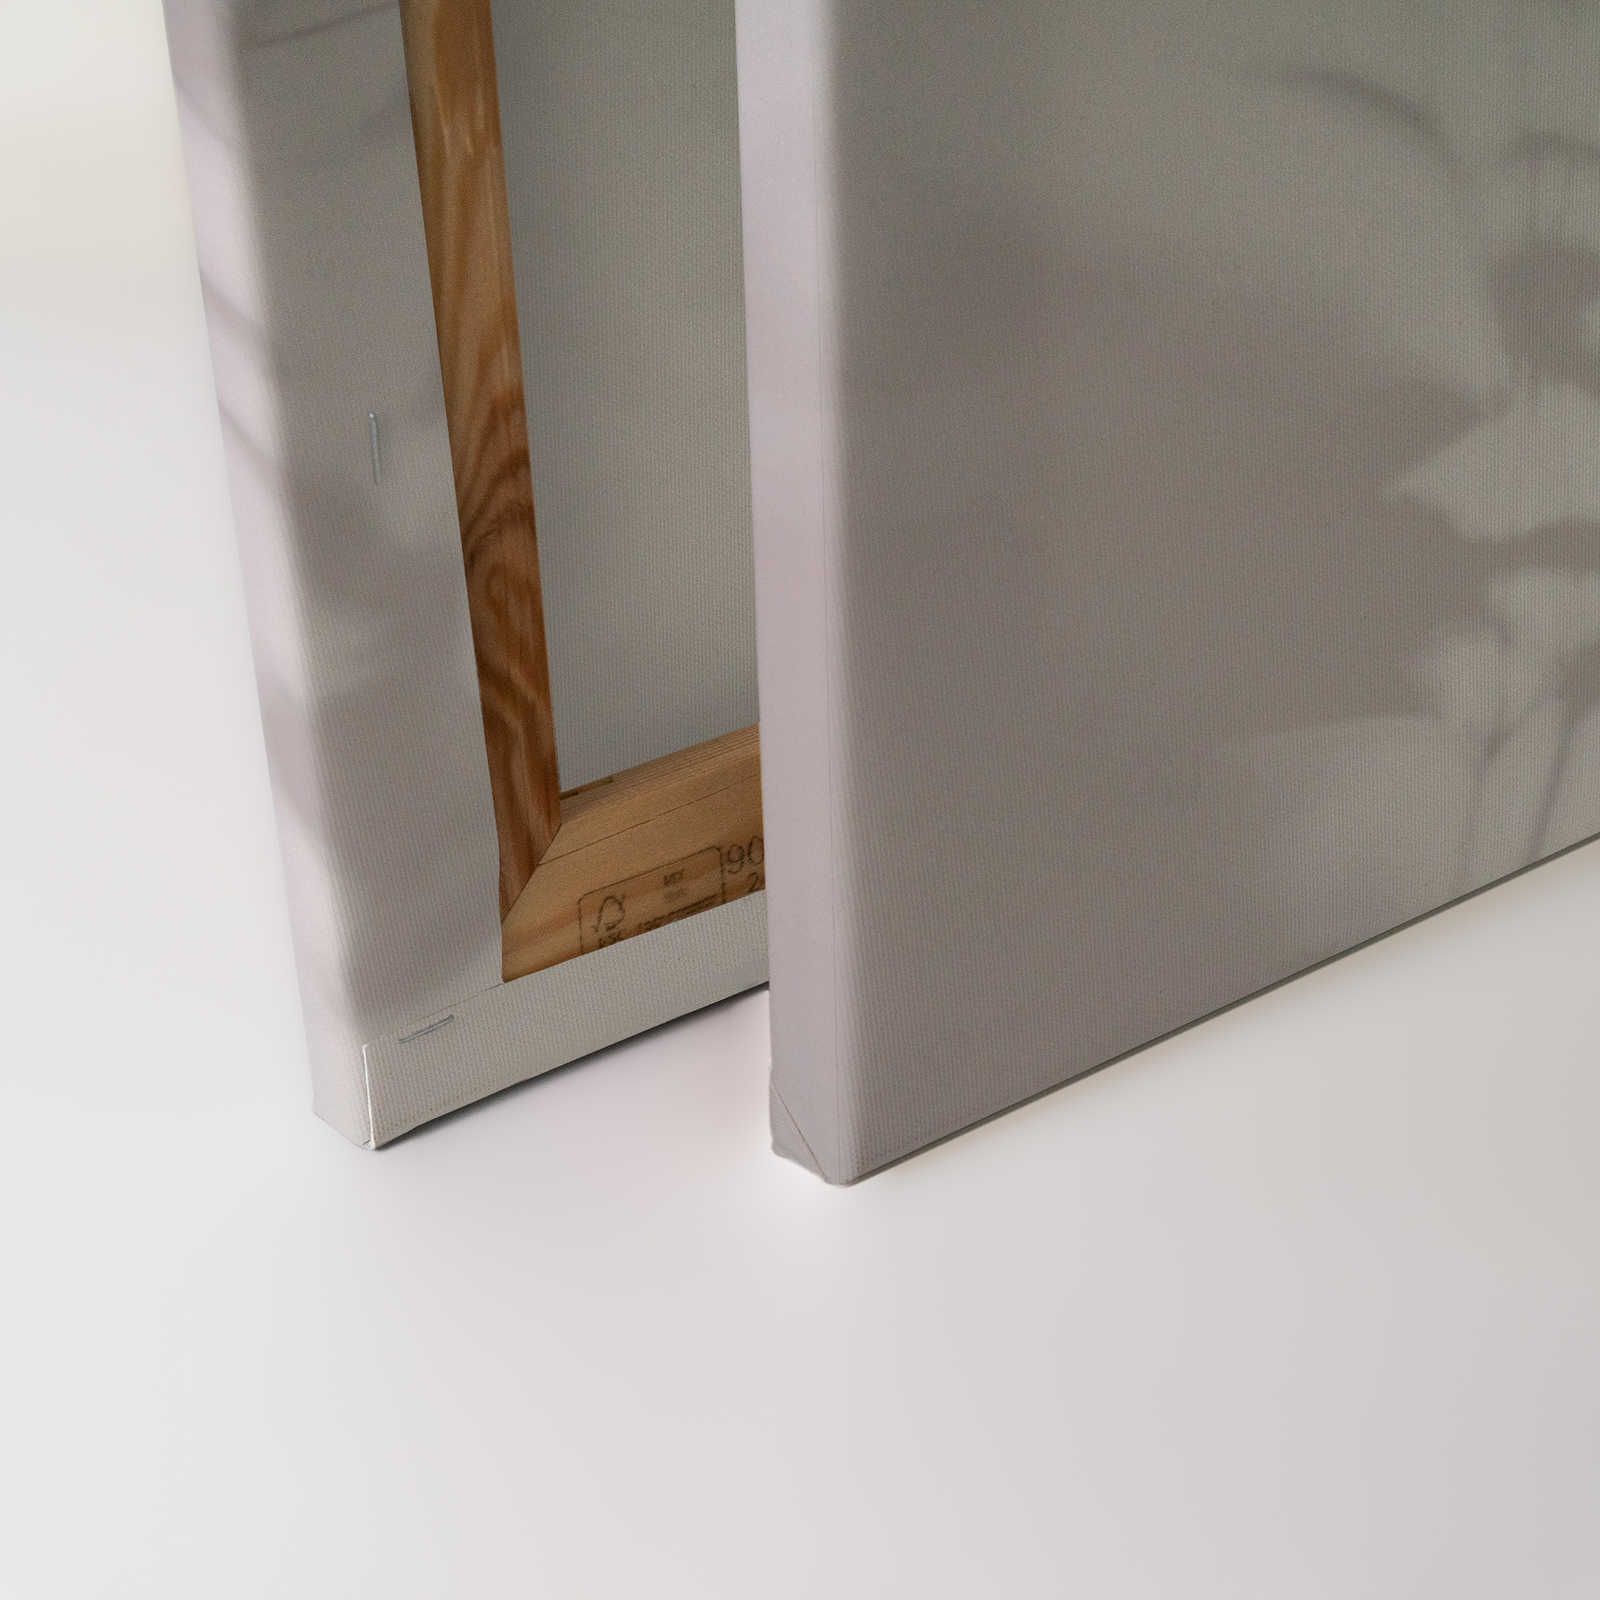             Shadow Room 2 - Natur Leinwandbild Grau & Weiß, verblasstes Design – 0,90 m x 0,60 m
        